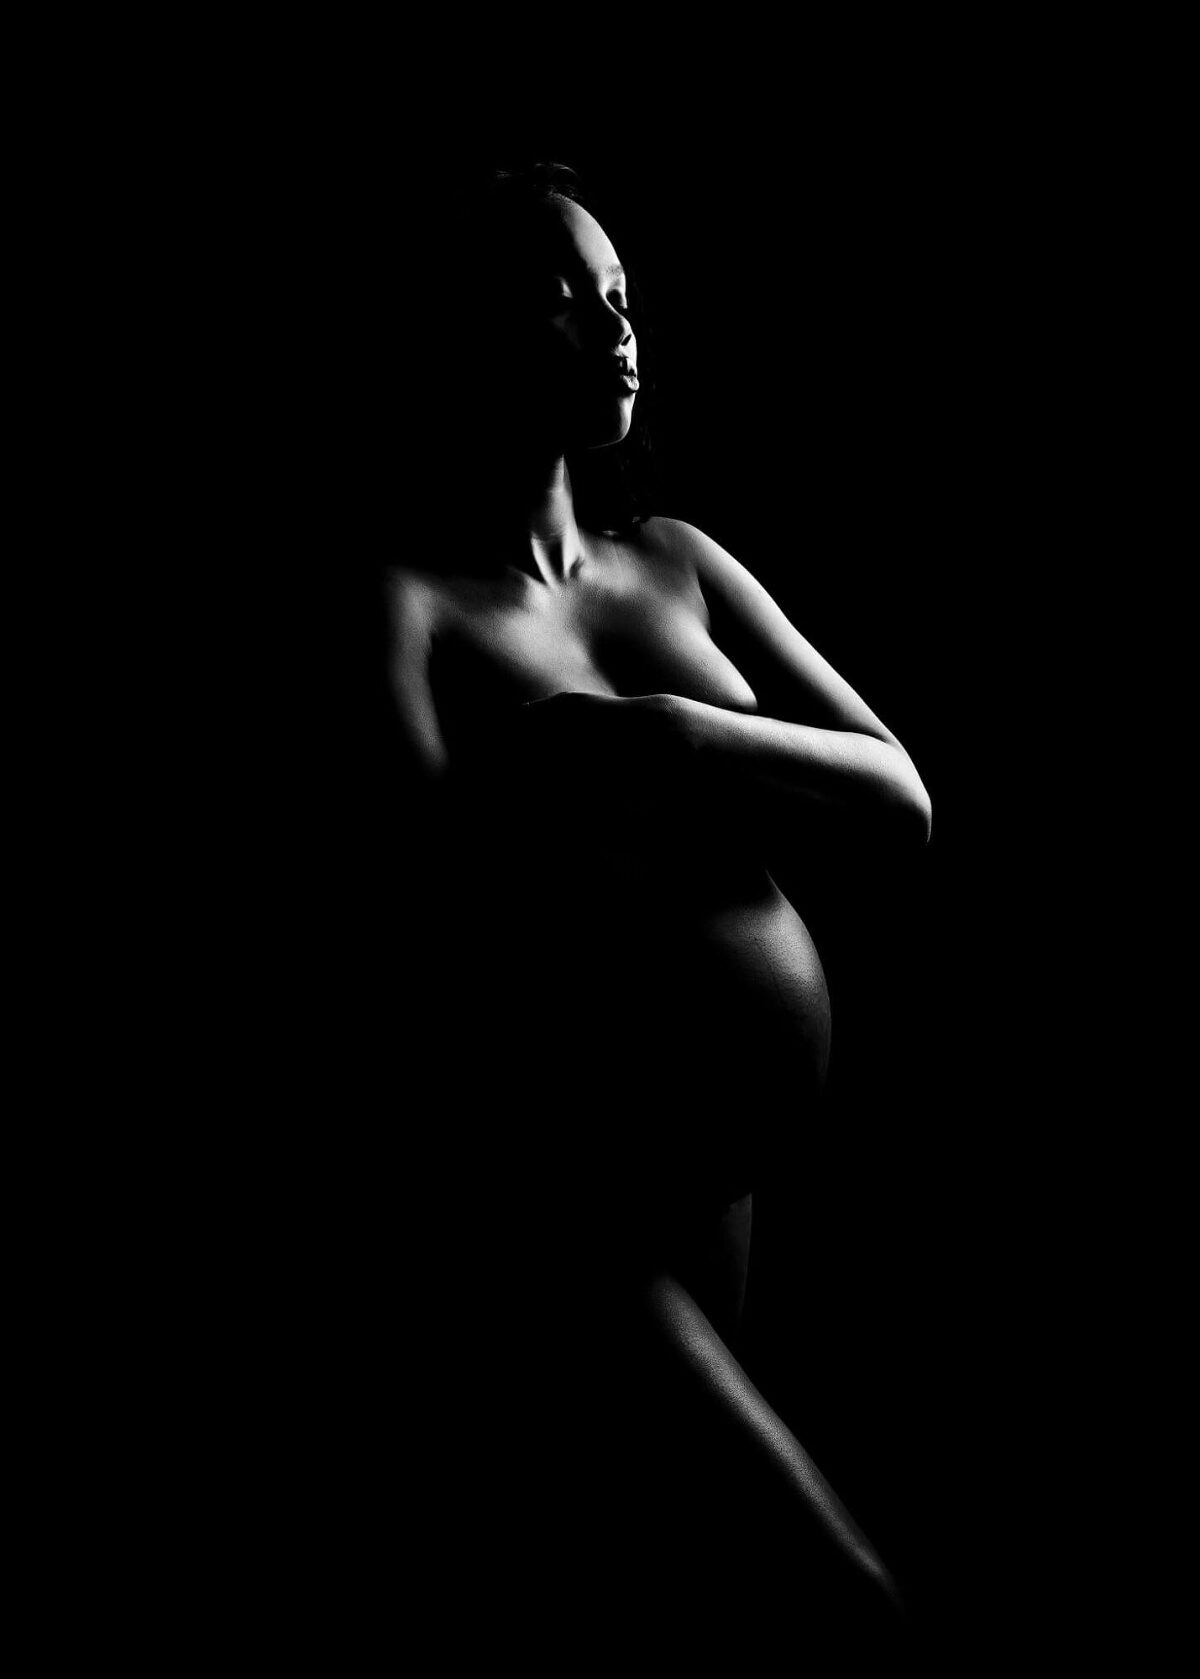 DFW pregnancy photographer, maternity photography Celina TX, Lewisville TX maternity portrait studio